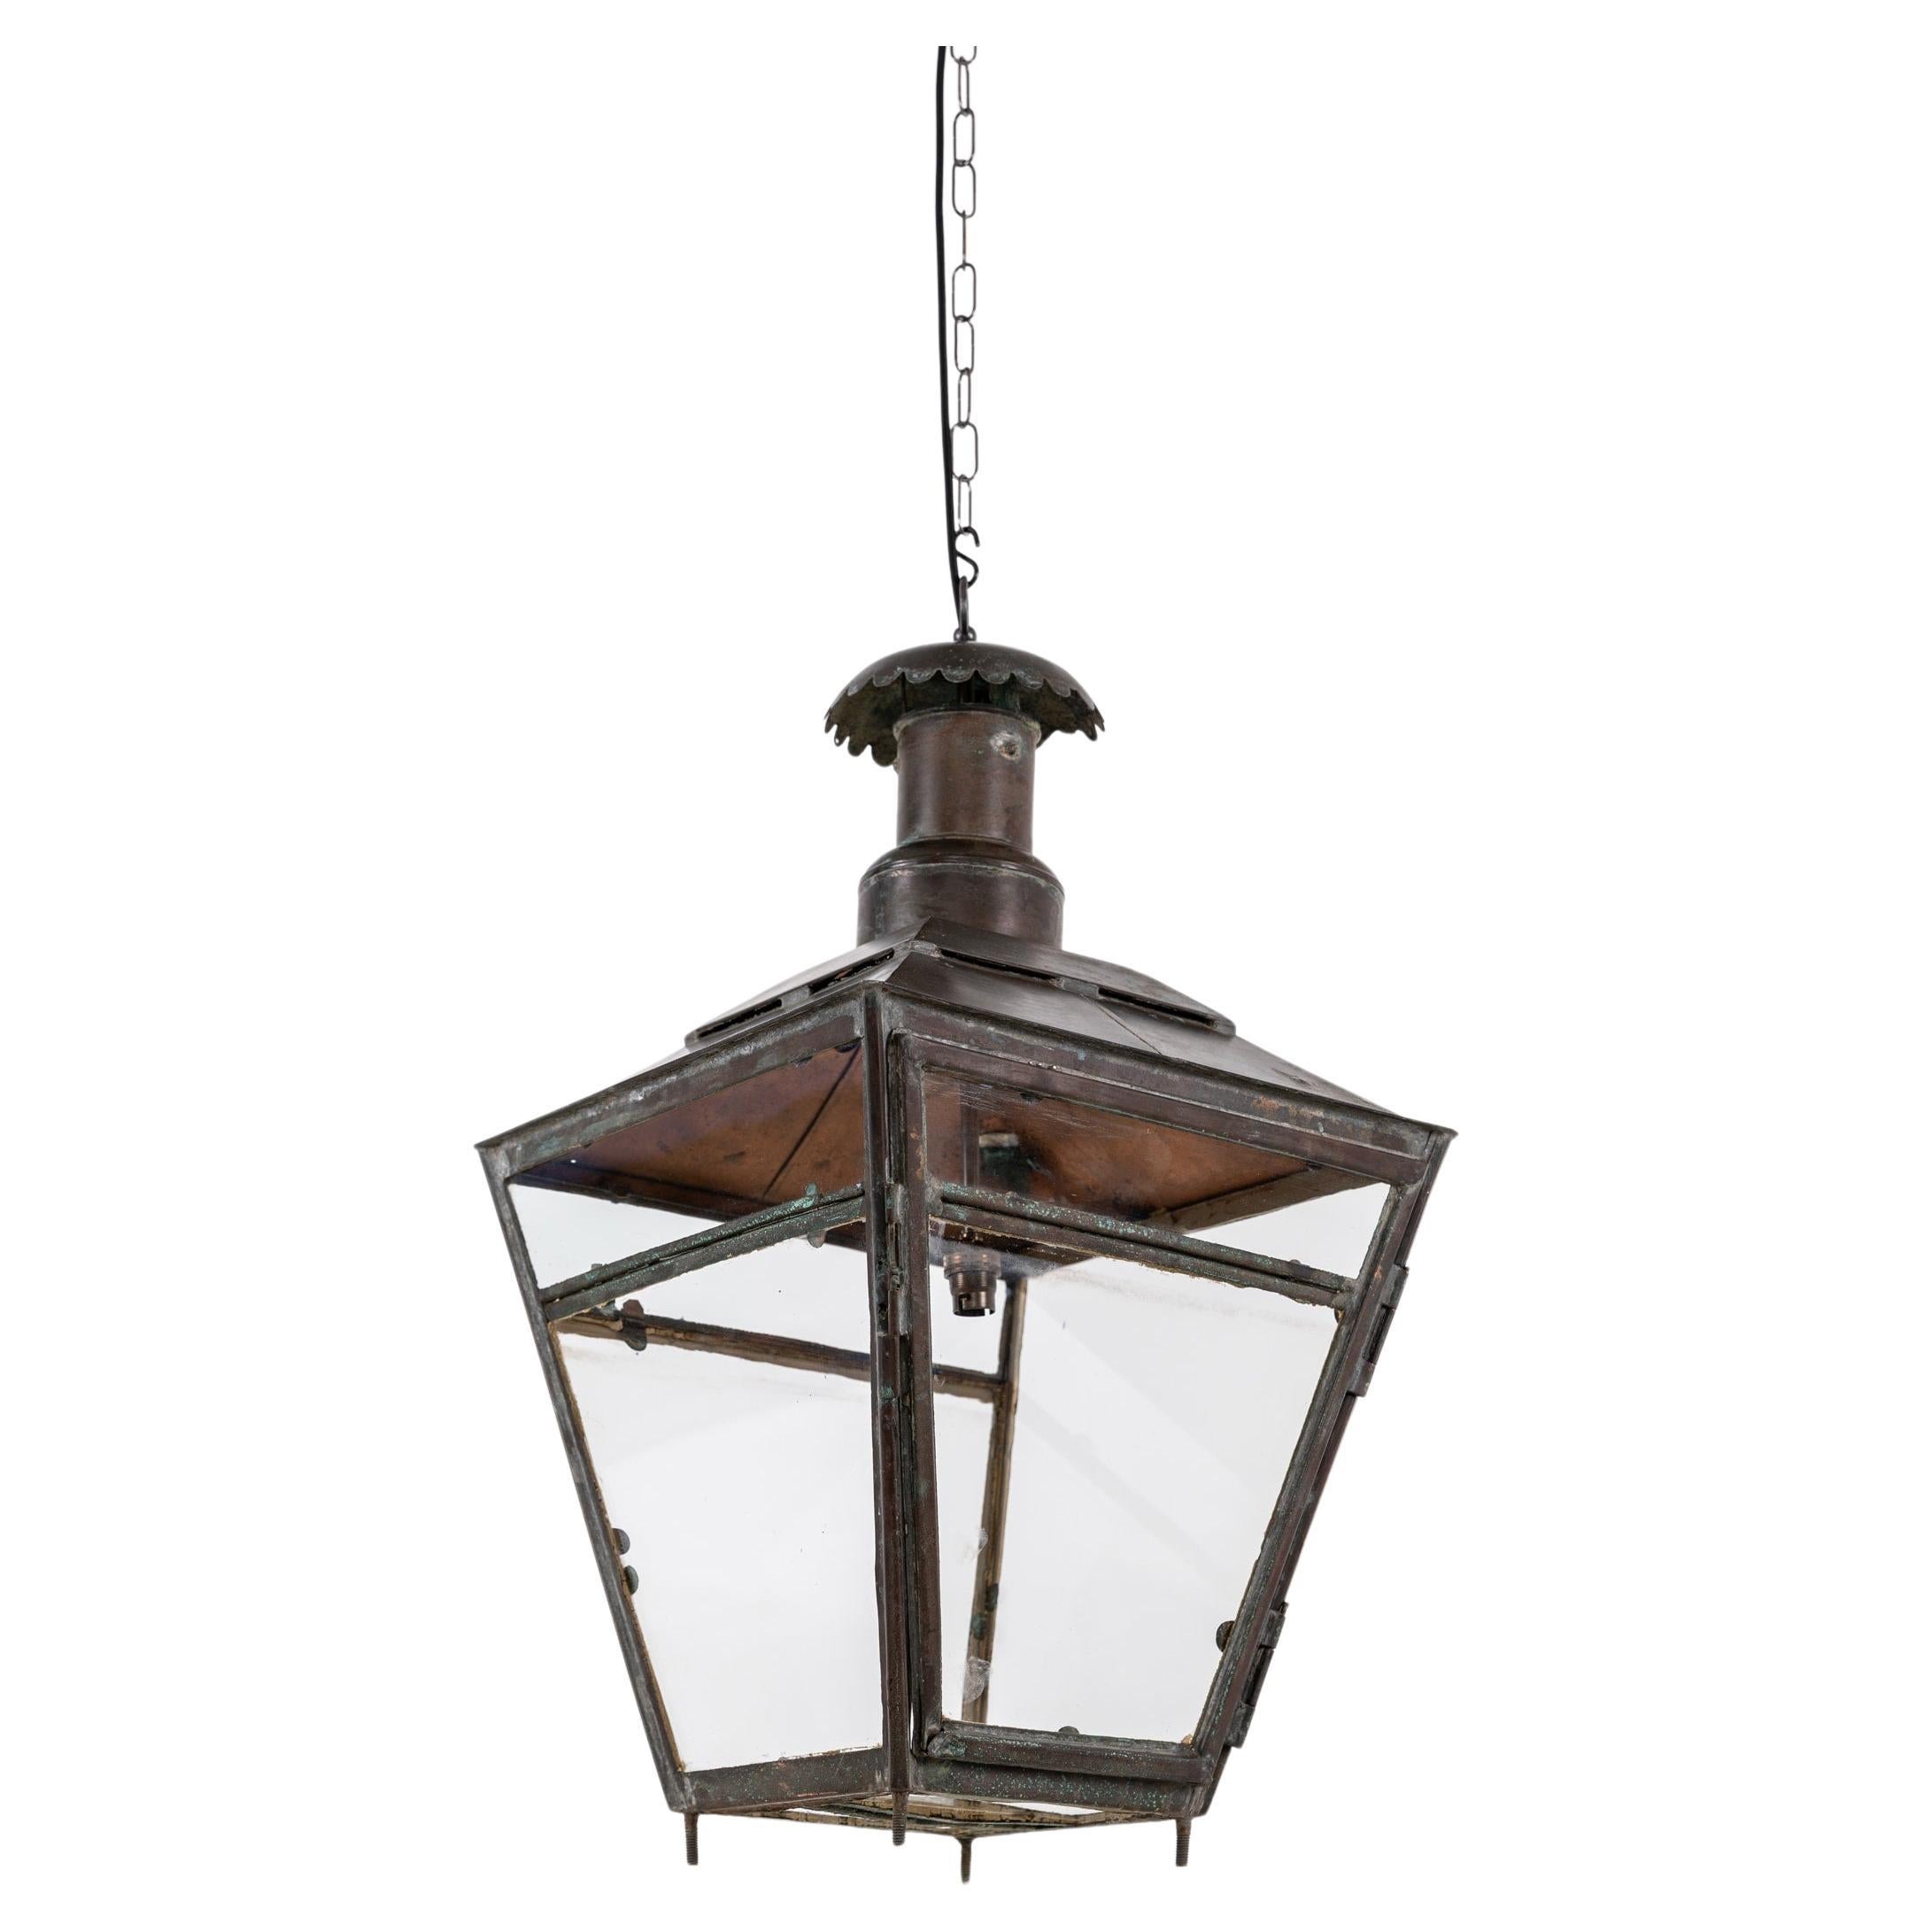 Antique Glazed Copper Railway L&NE Hall Lantern Pendant Light Lamp. C.1900 For Sale